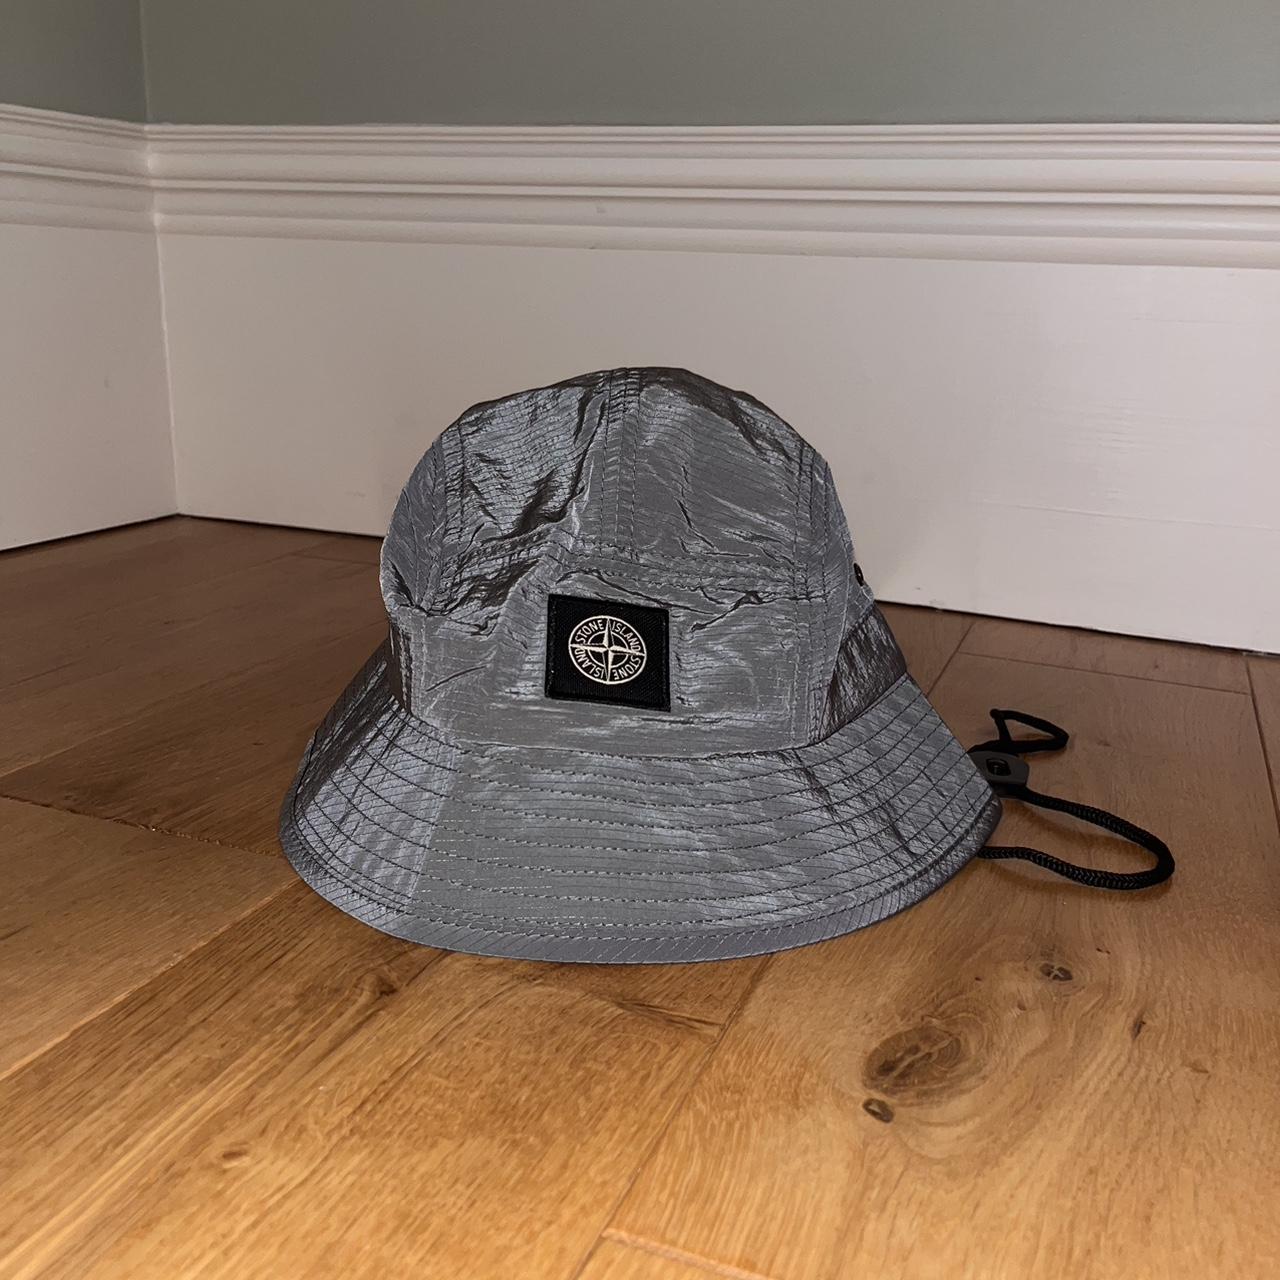 Stone island nylon metal bucket hat in grey - NO... - Depop